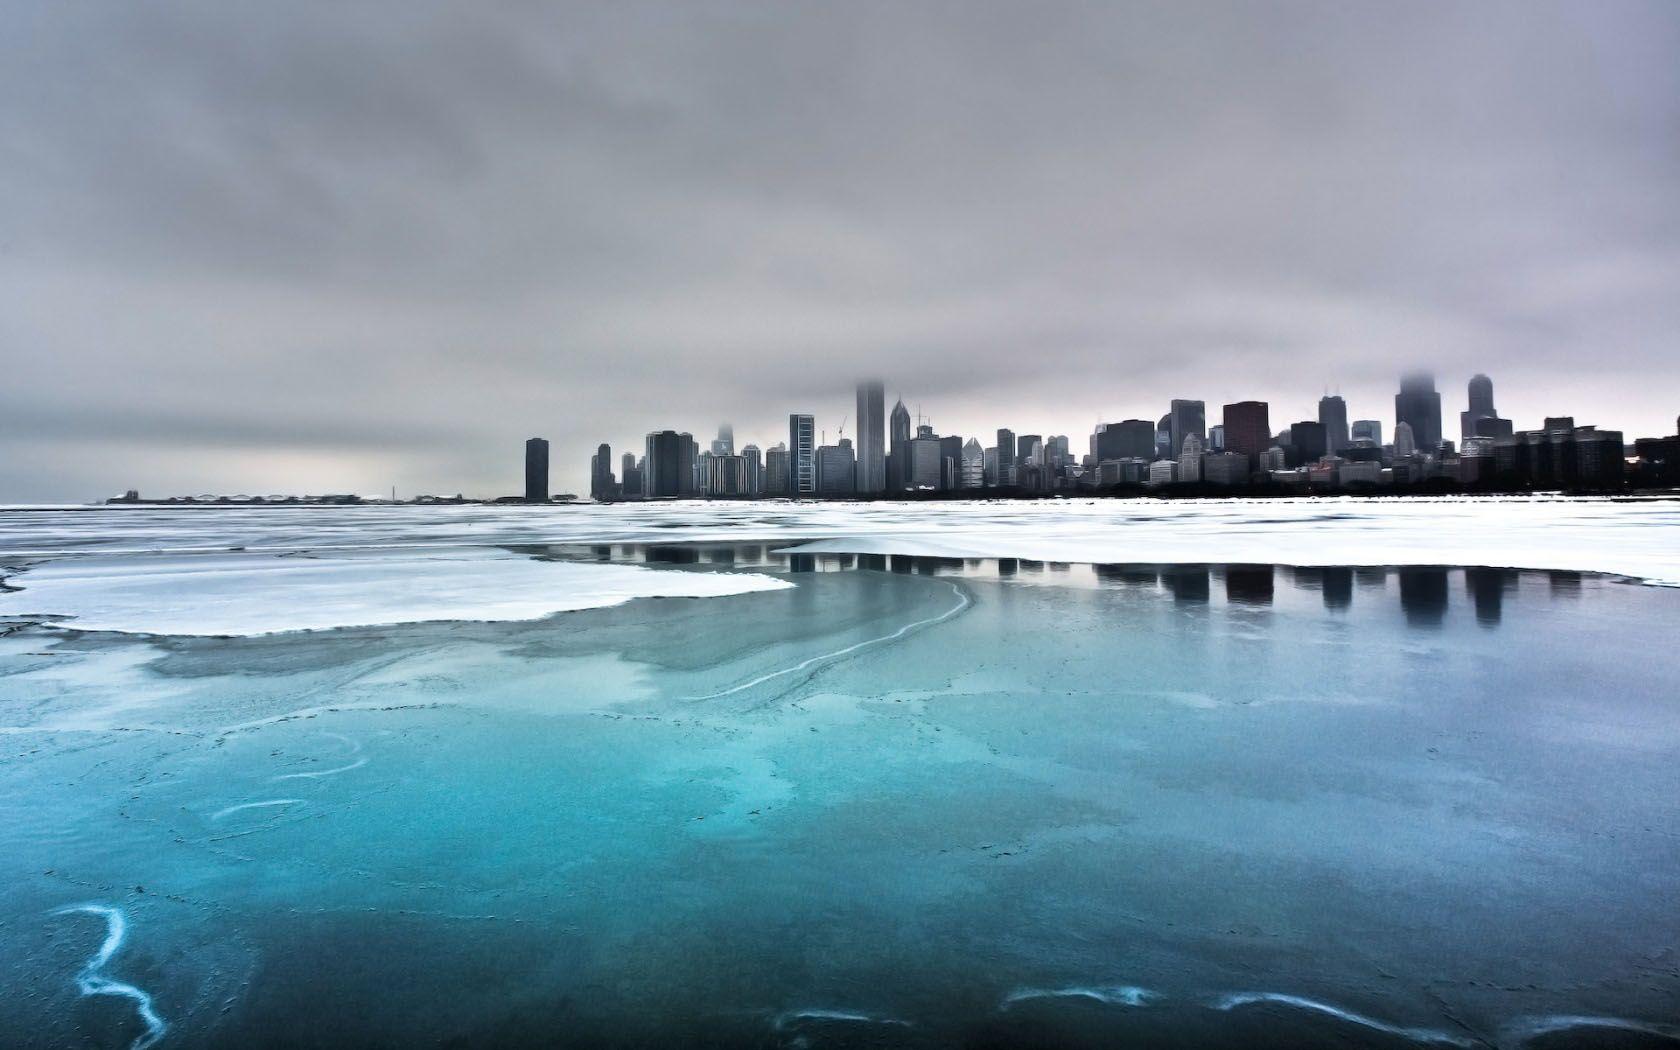 Frozen Lake Michigan, Chicago, Illinois